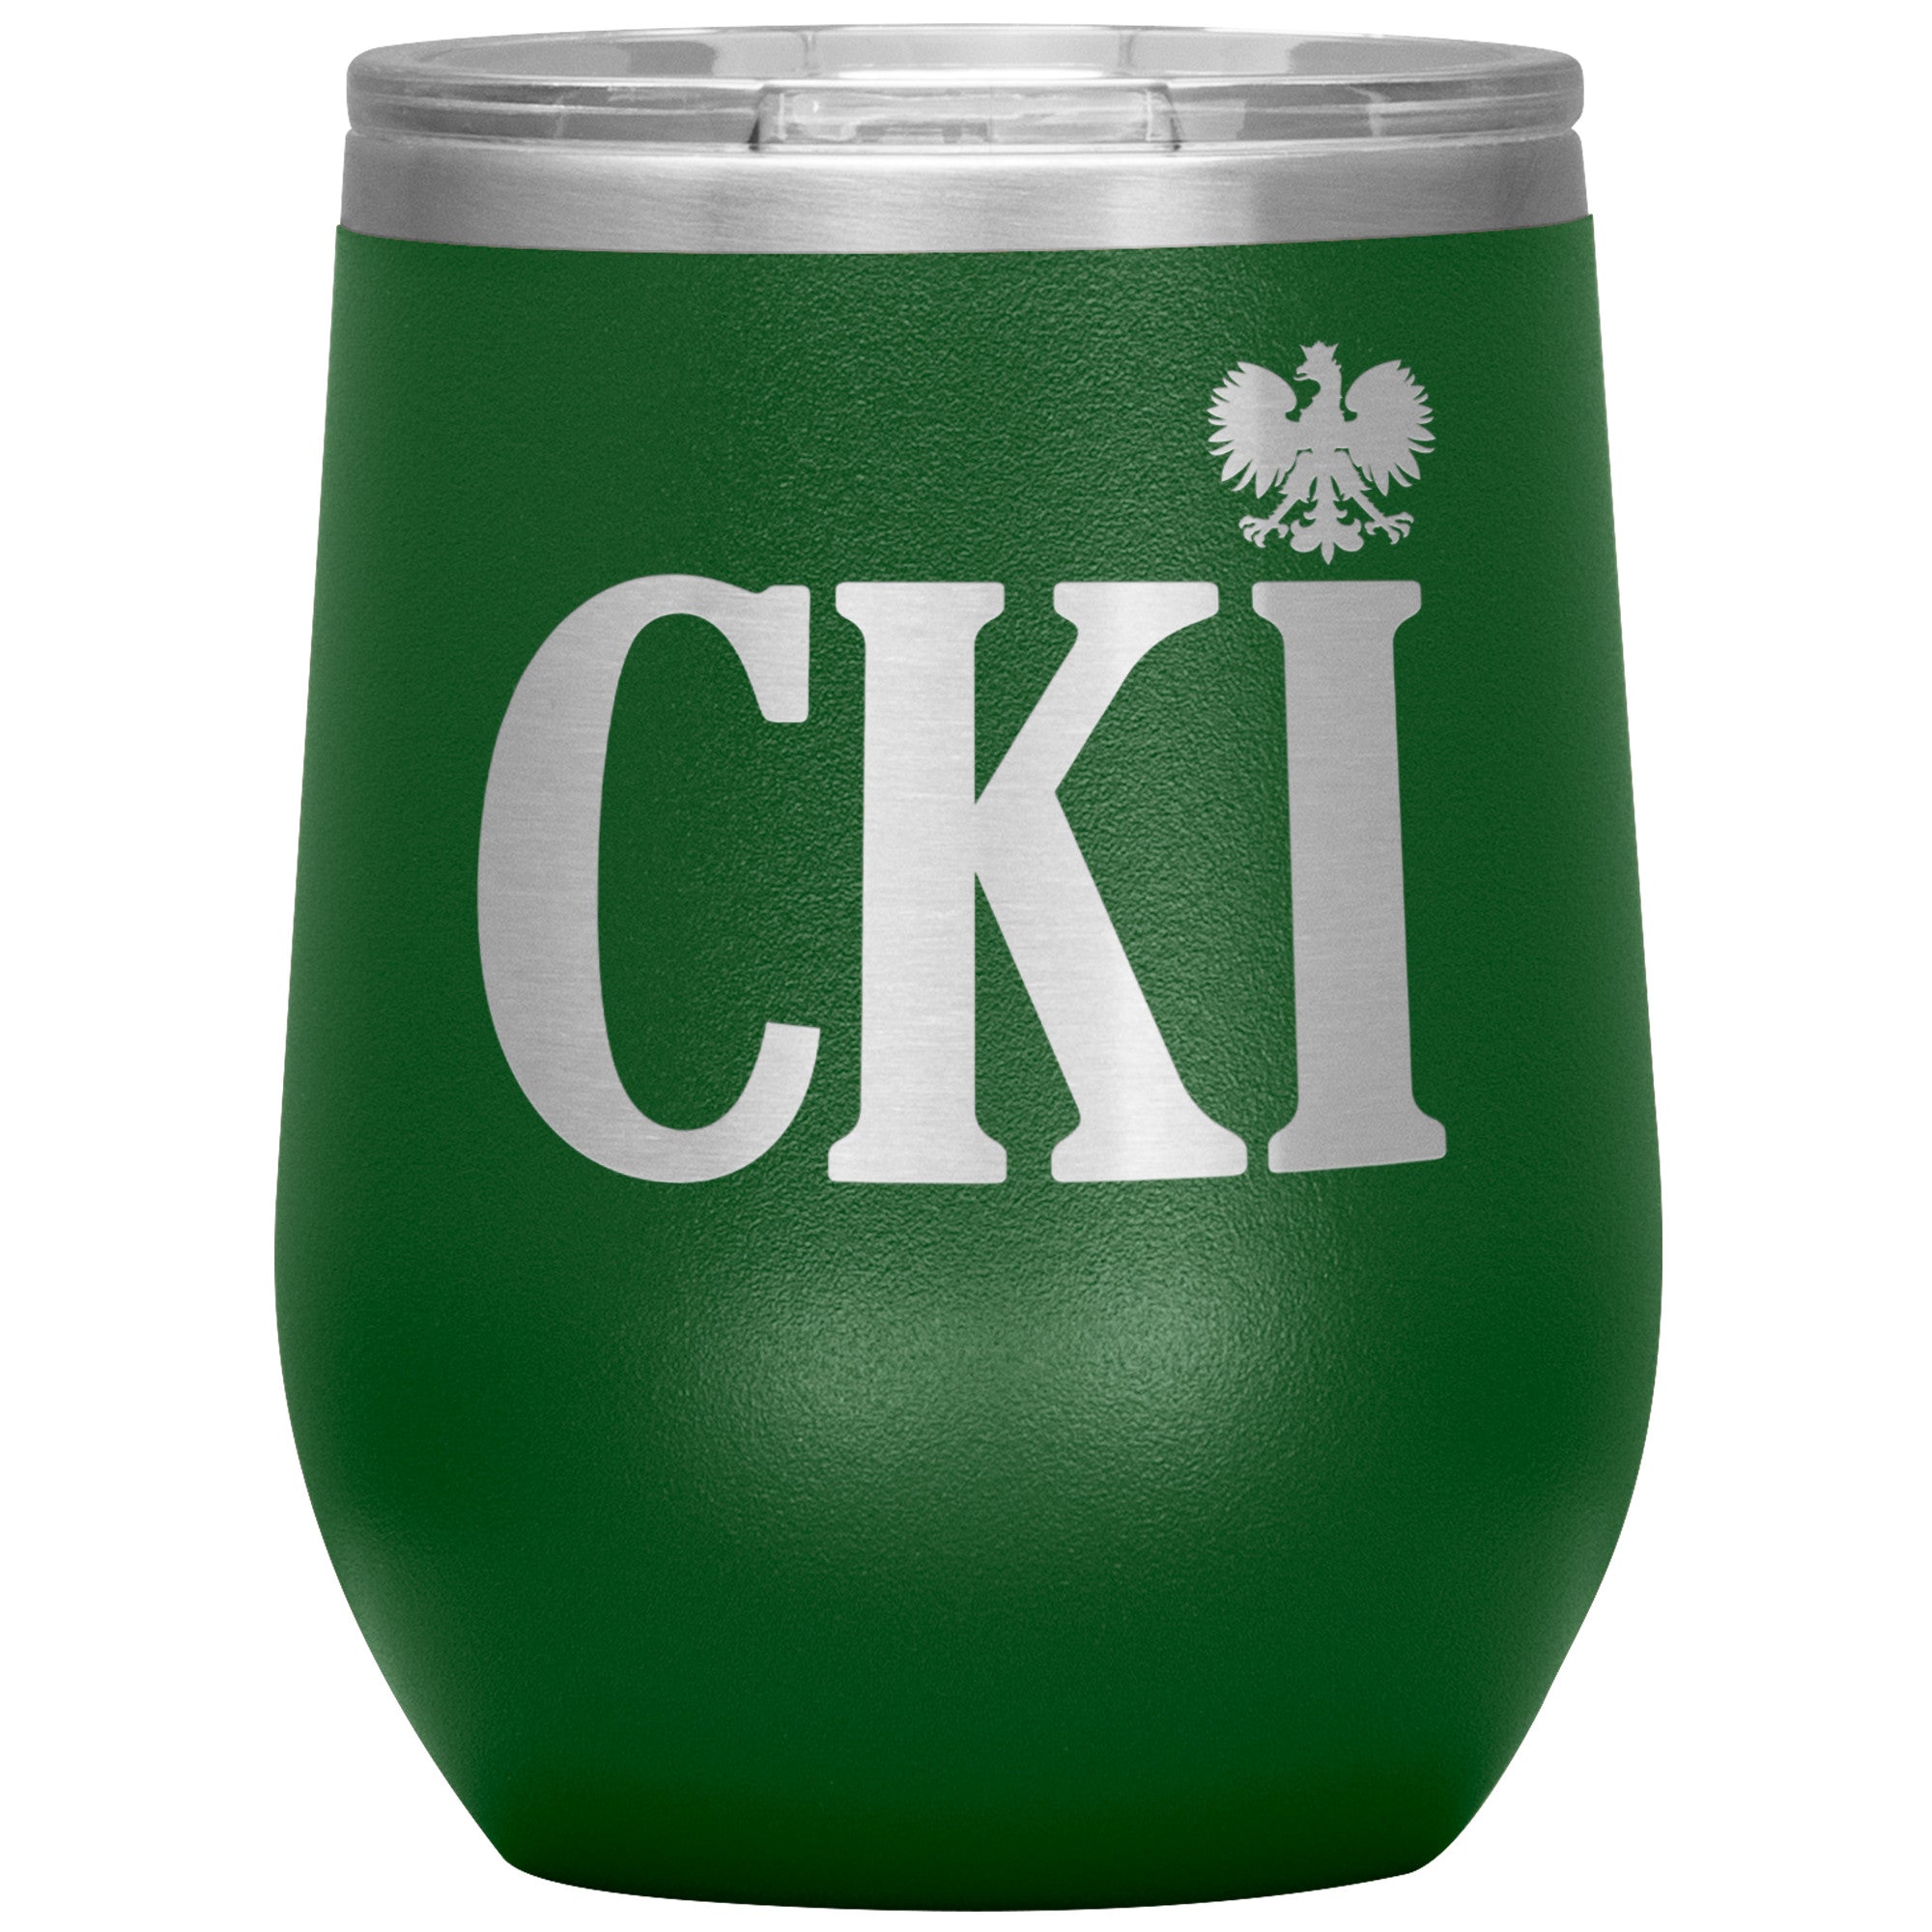 Polish Surname Ending in CKI Insulated Wine Tumbler Tumblers teelaunch Green  